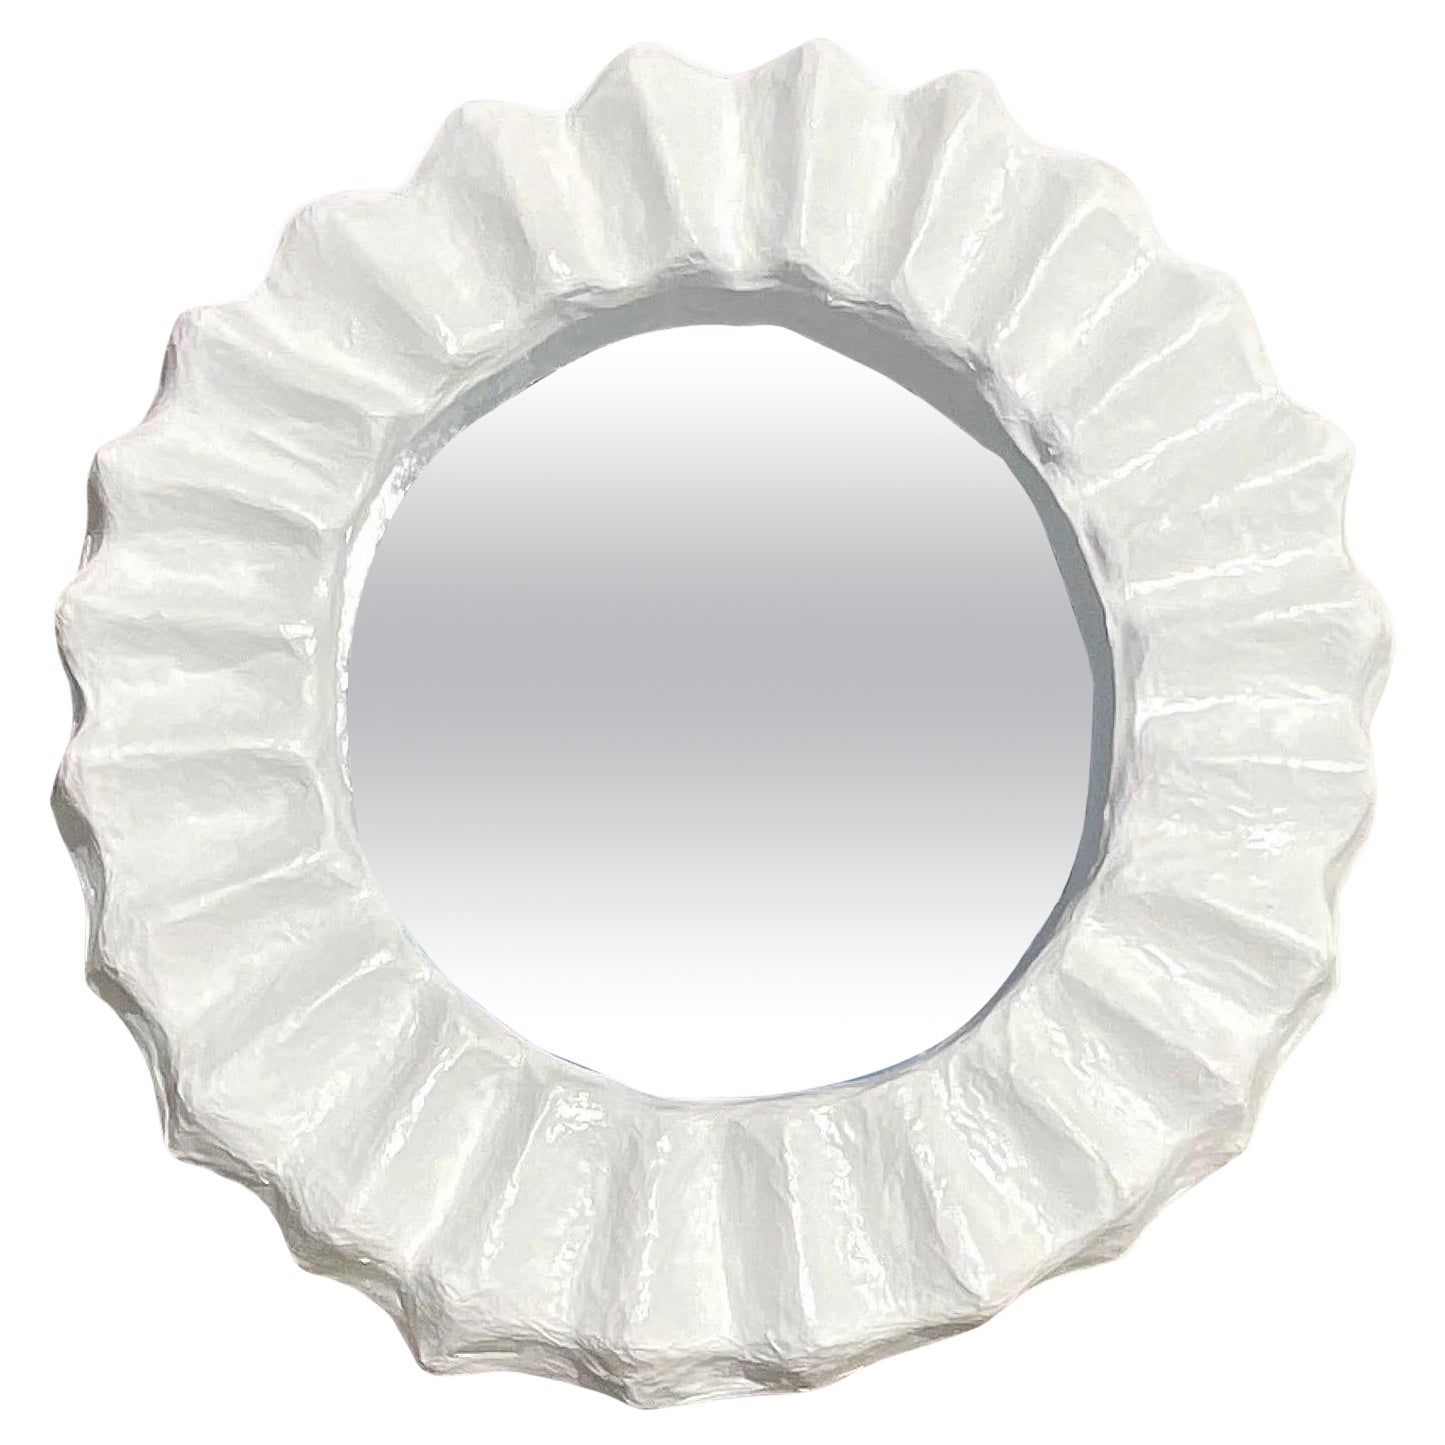 Early 21st Century White Ruffle Frame Mirror